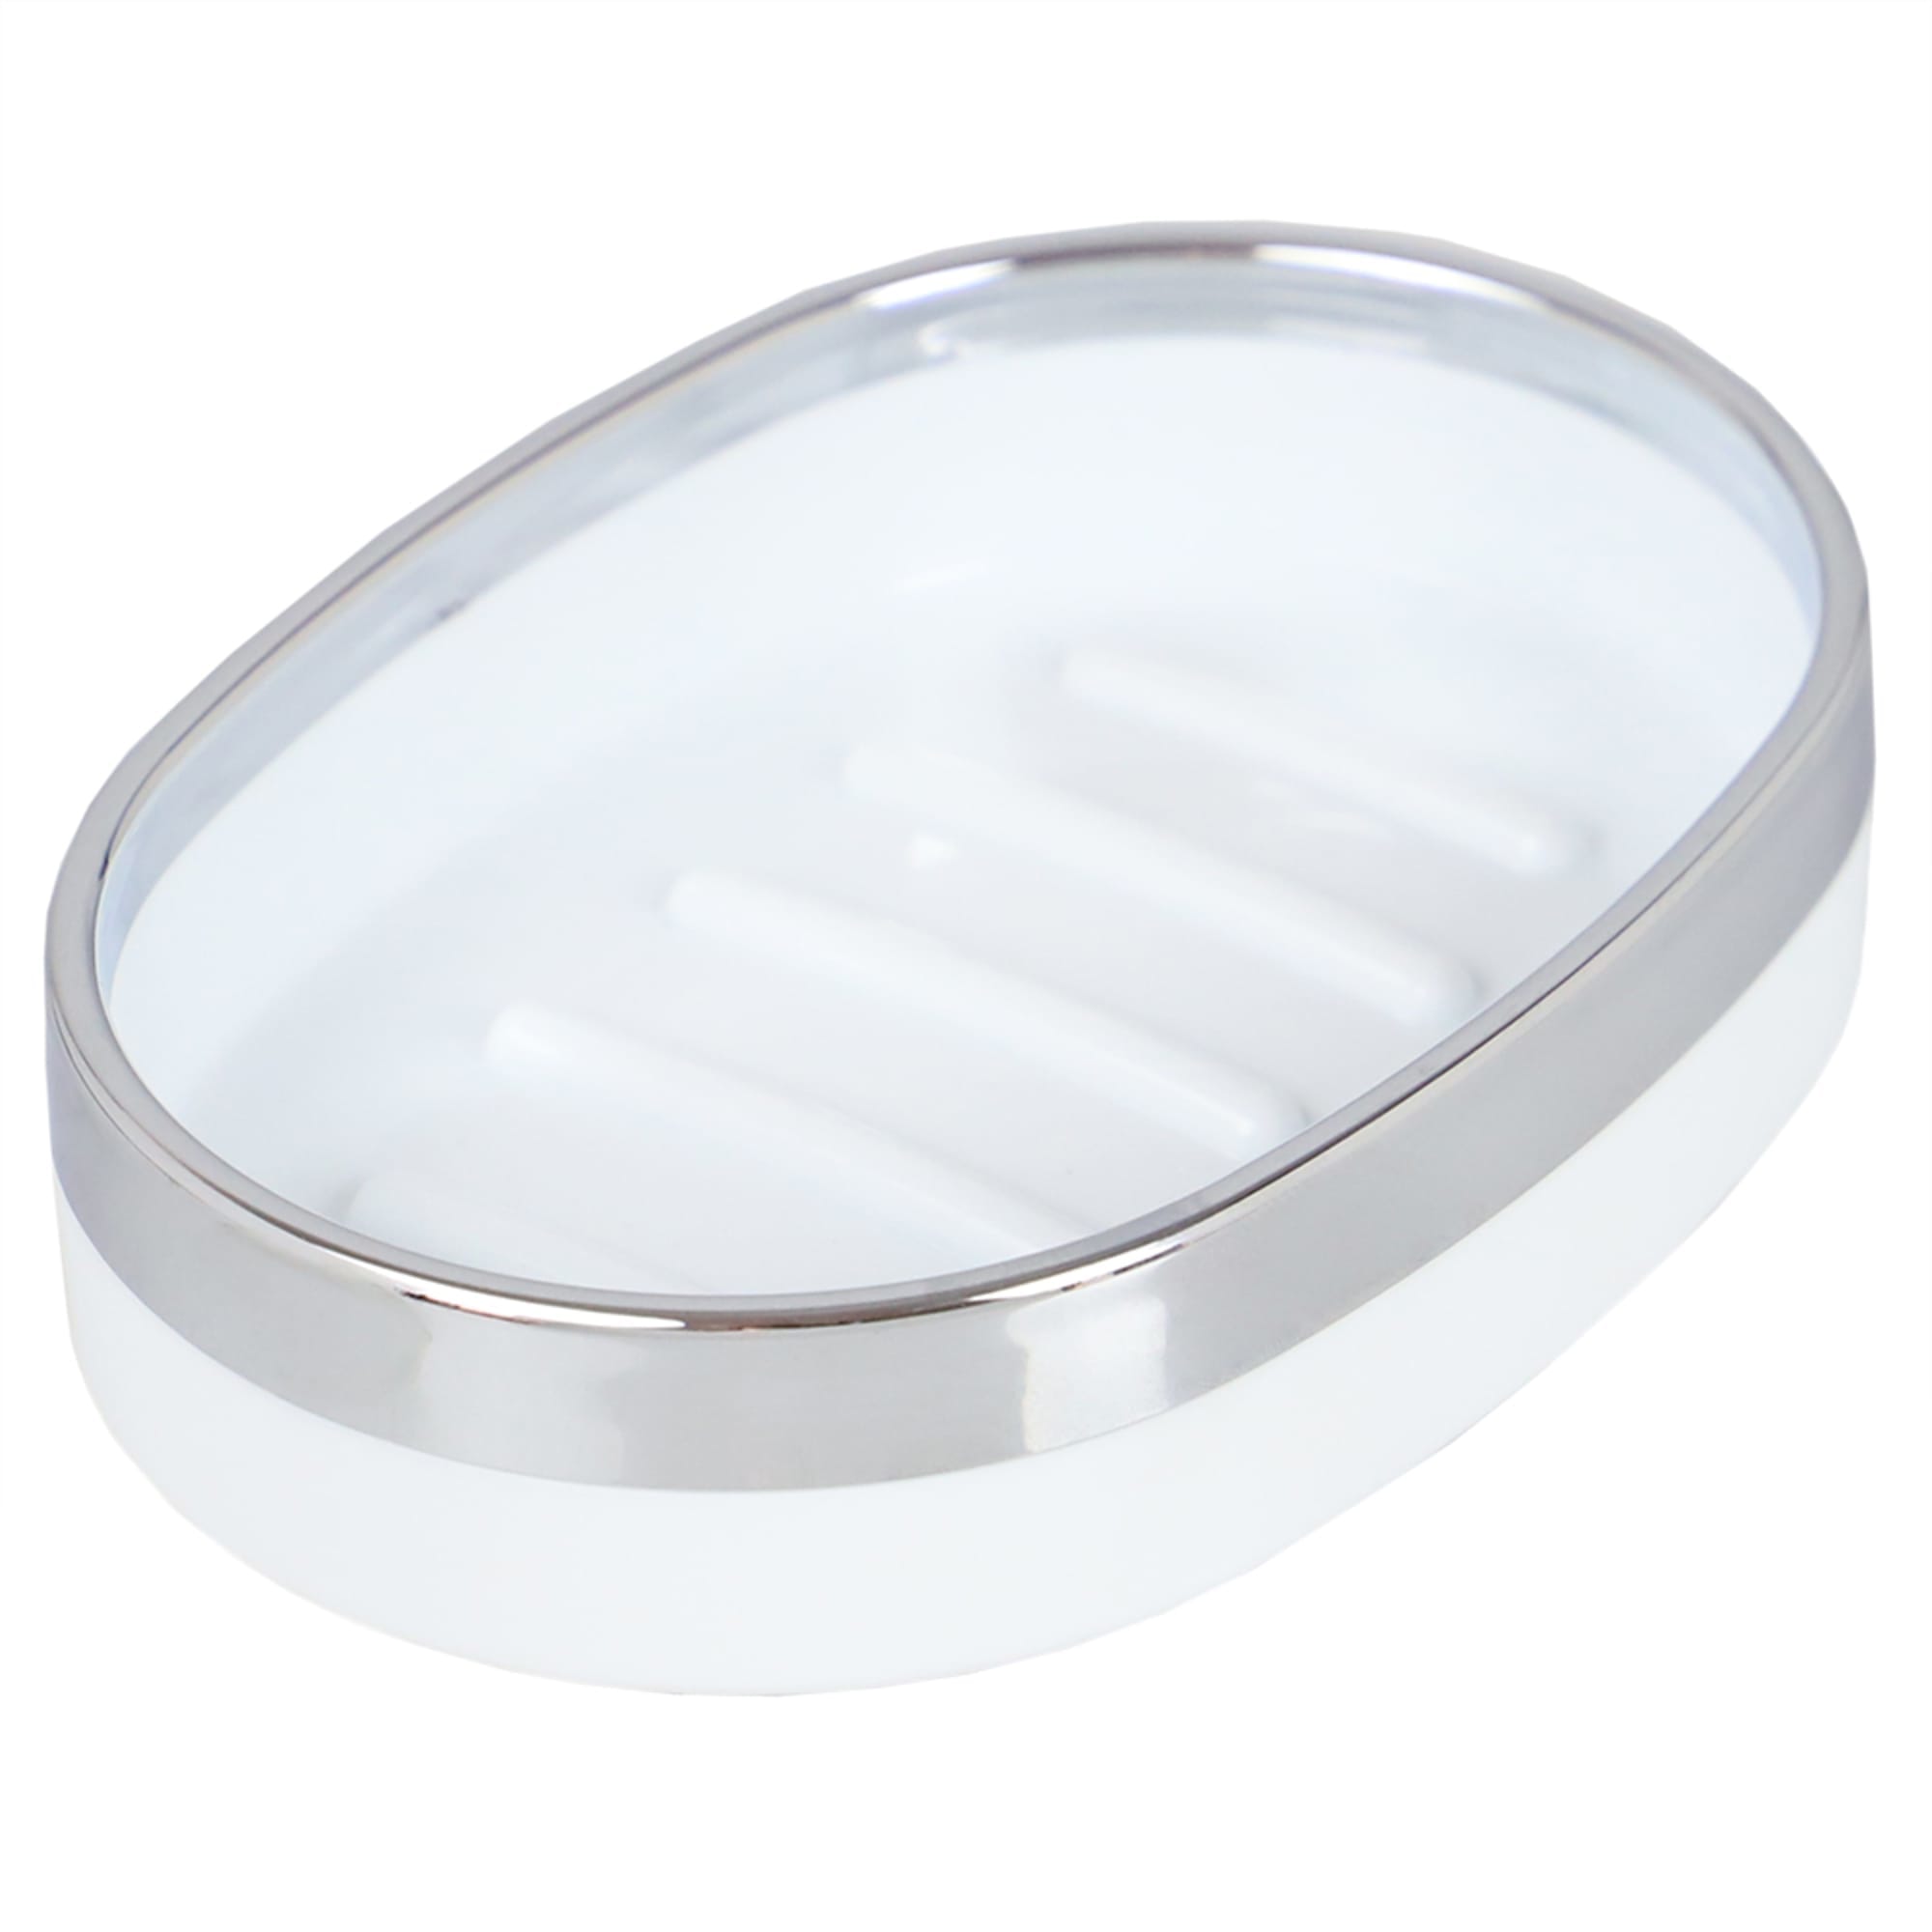 Home Basics Skylar Oval Ridged ABS Plastic Soap Dish, White $3.00 EACH, CASE PACK OF 12